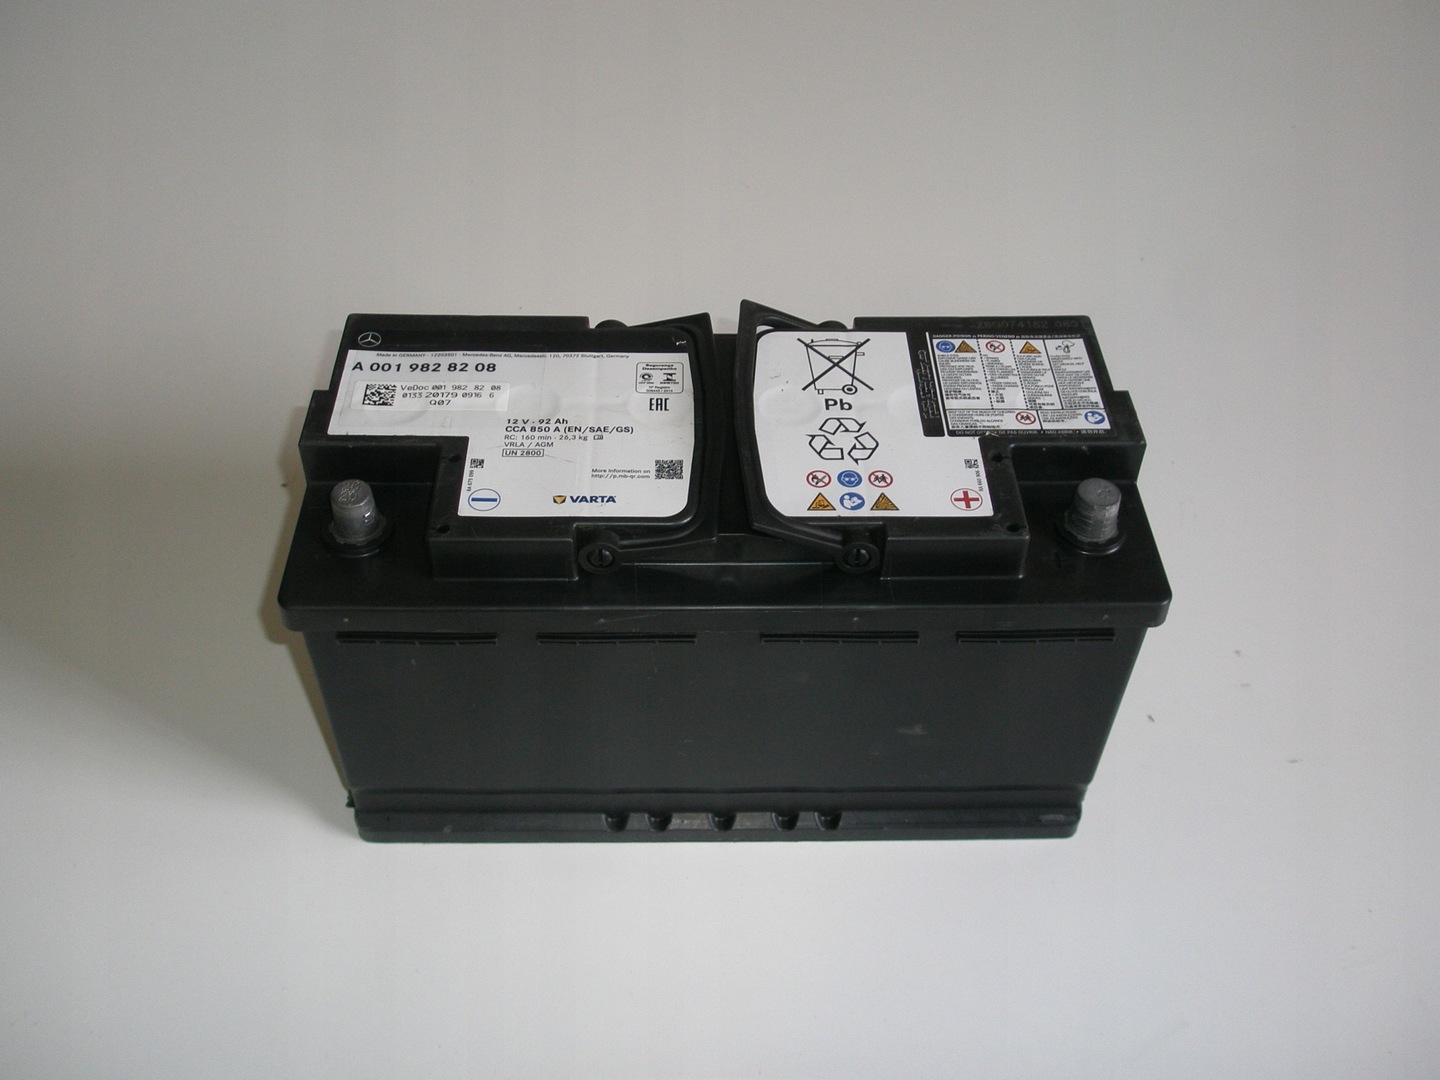 Battery gel agm varta 12v 92ah 850a original mercedes start-s battery